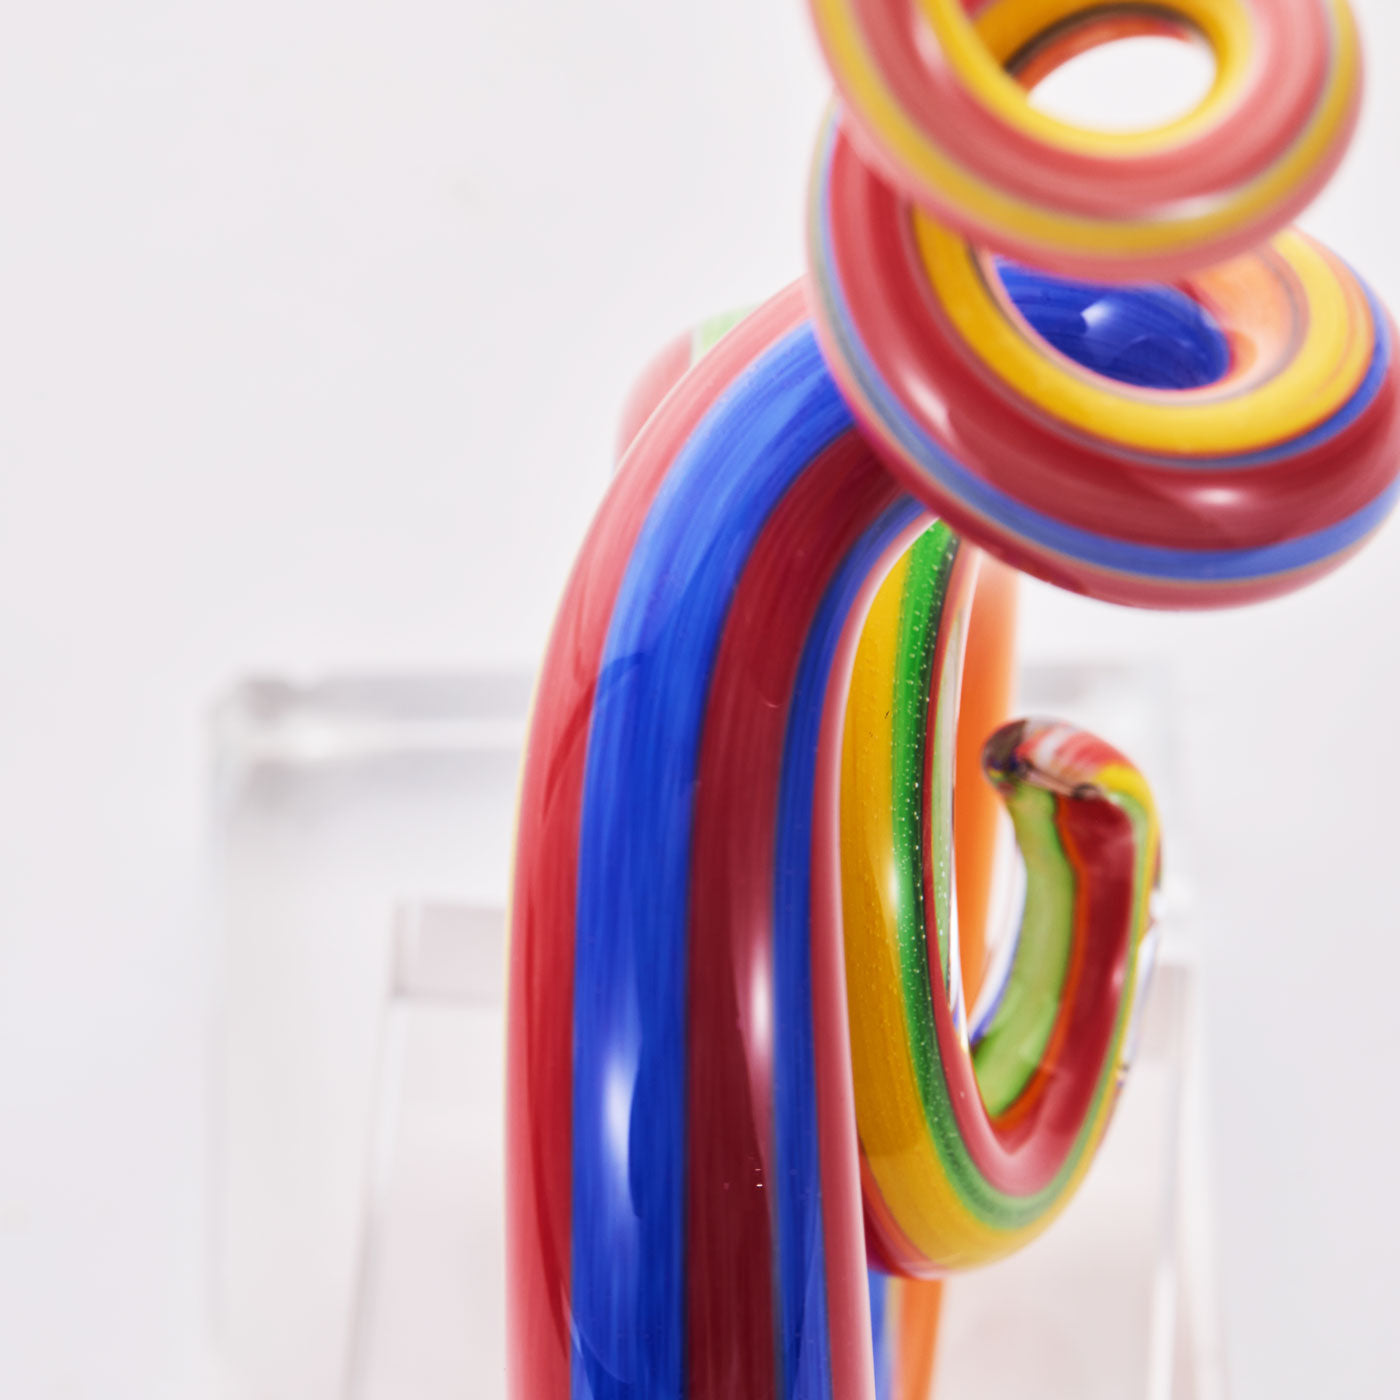 Luxury Lane Hand Blown Abstract Rainbow Swirl Sommerso Art Glass Sculpture 9.5-12 inch tall